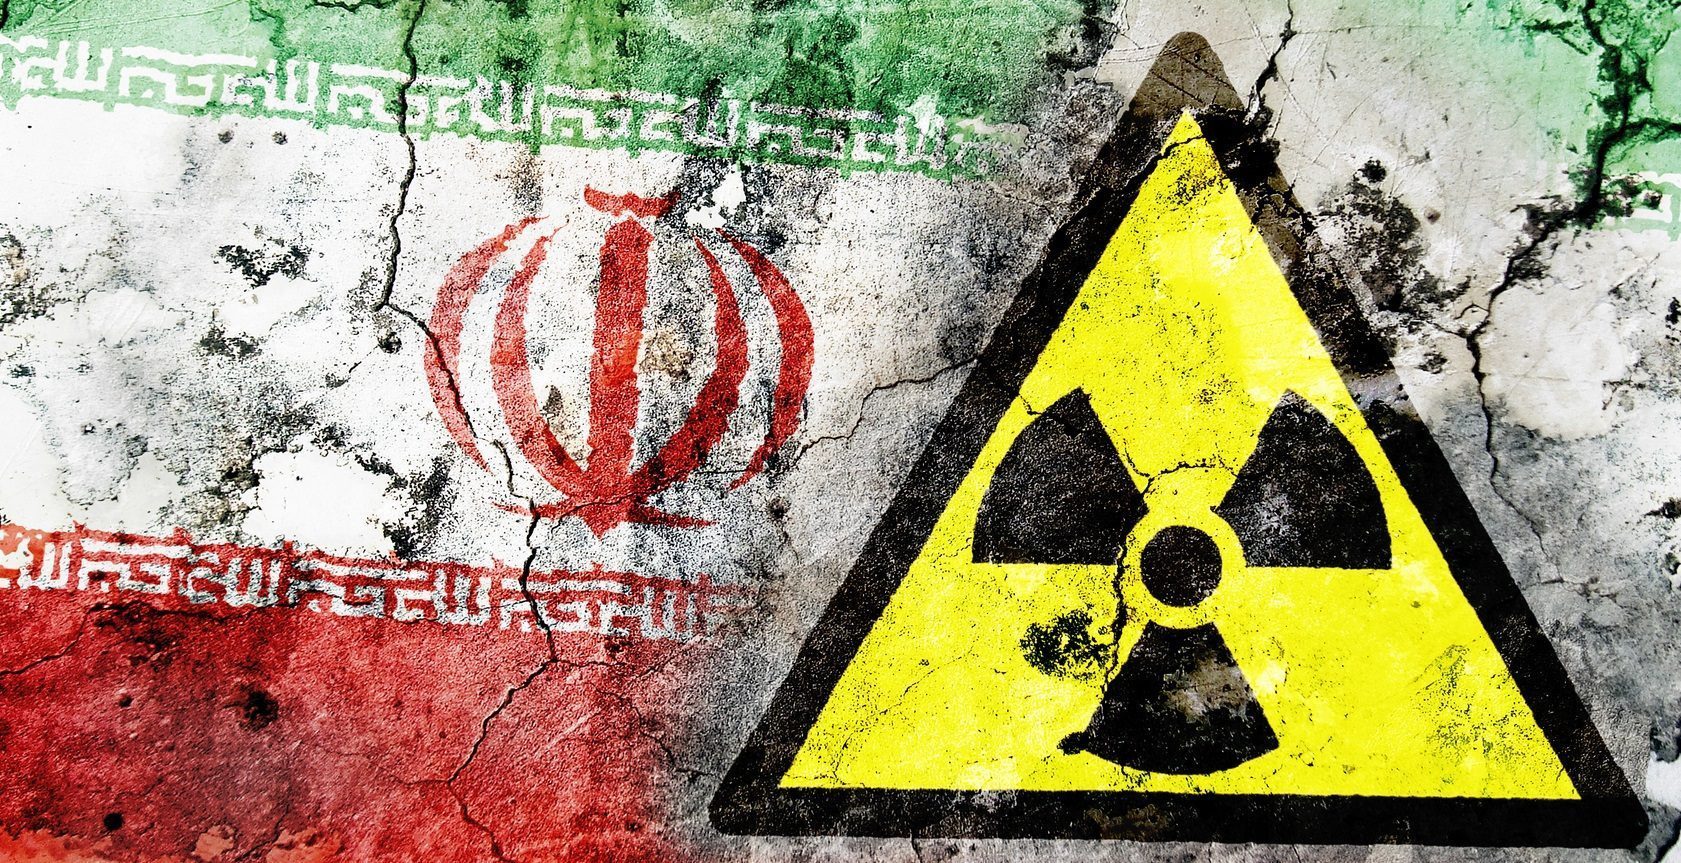 Iran-Nuclear-Deal